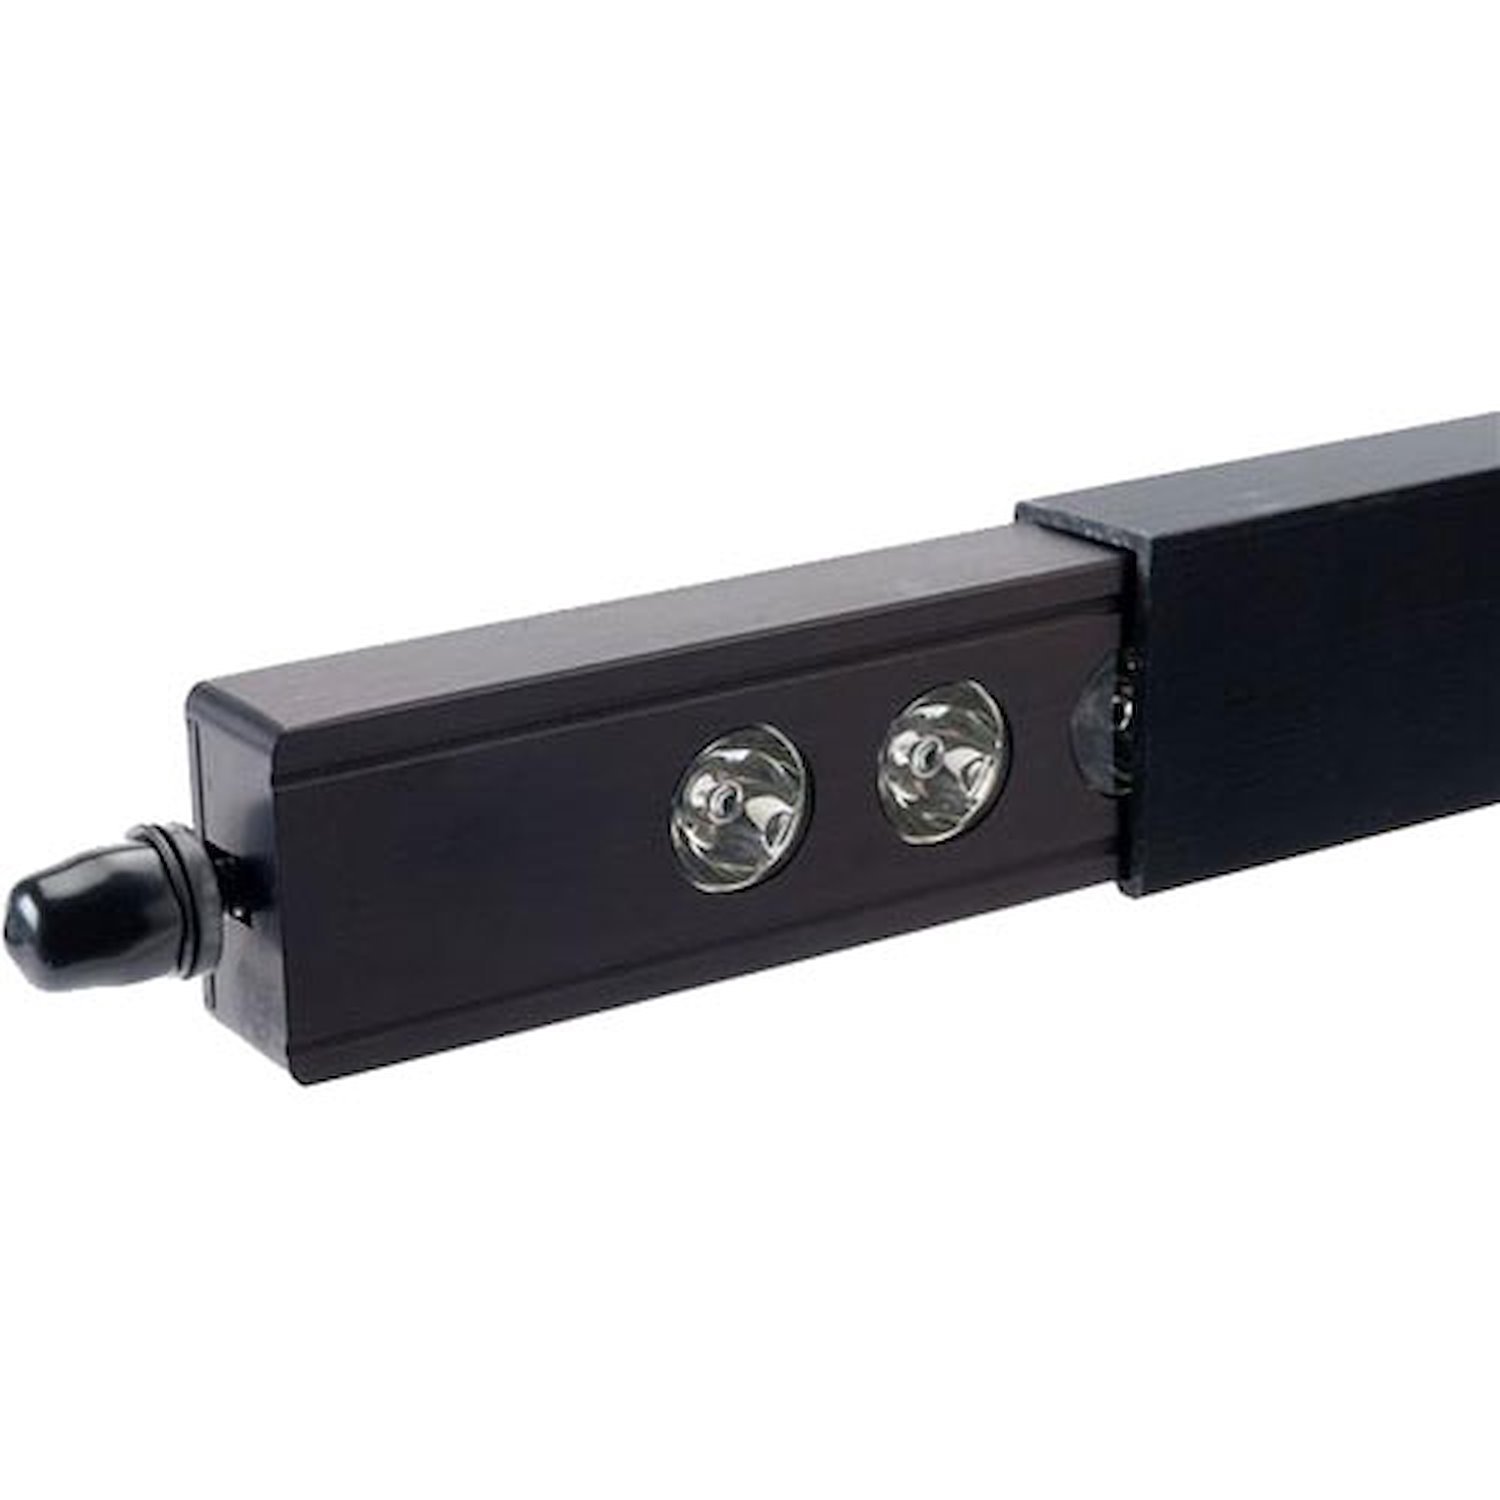 Luminix LED 50" Light Bar Wing Guard Fits 60" Curved or Straight Luminix Light Bars